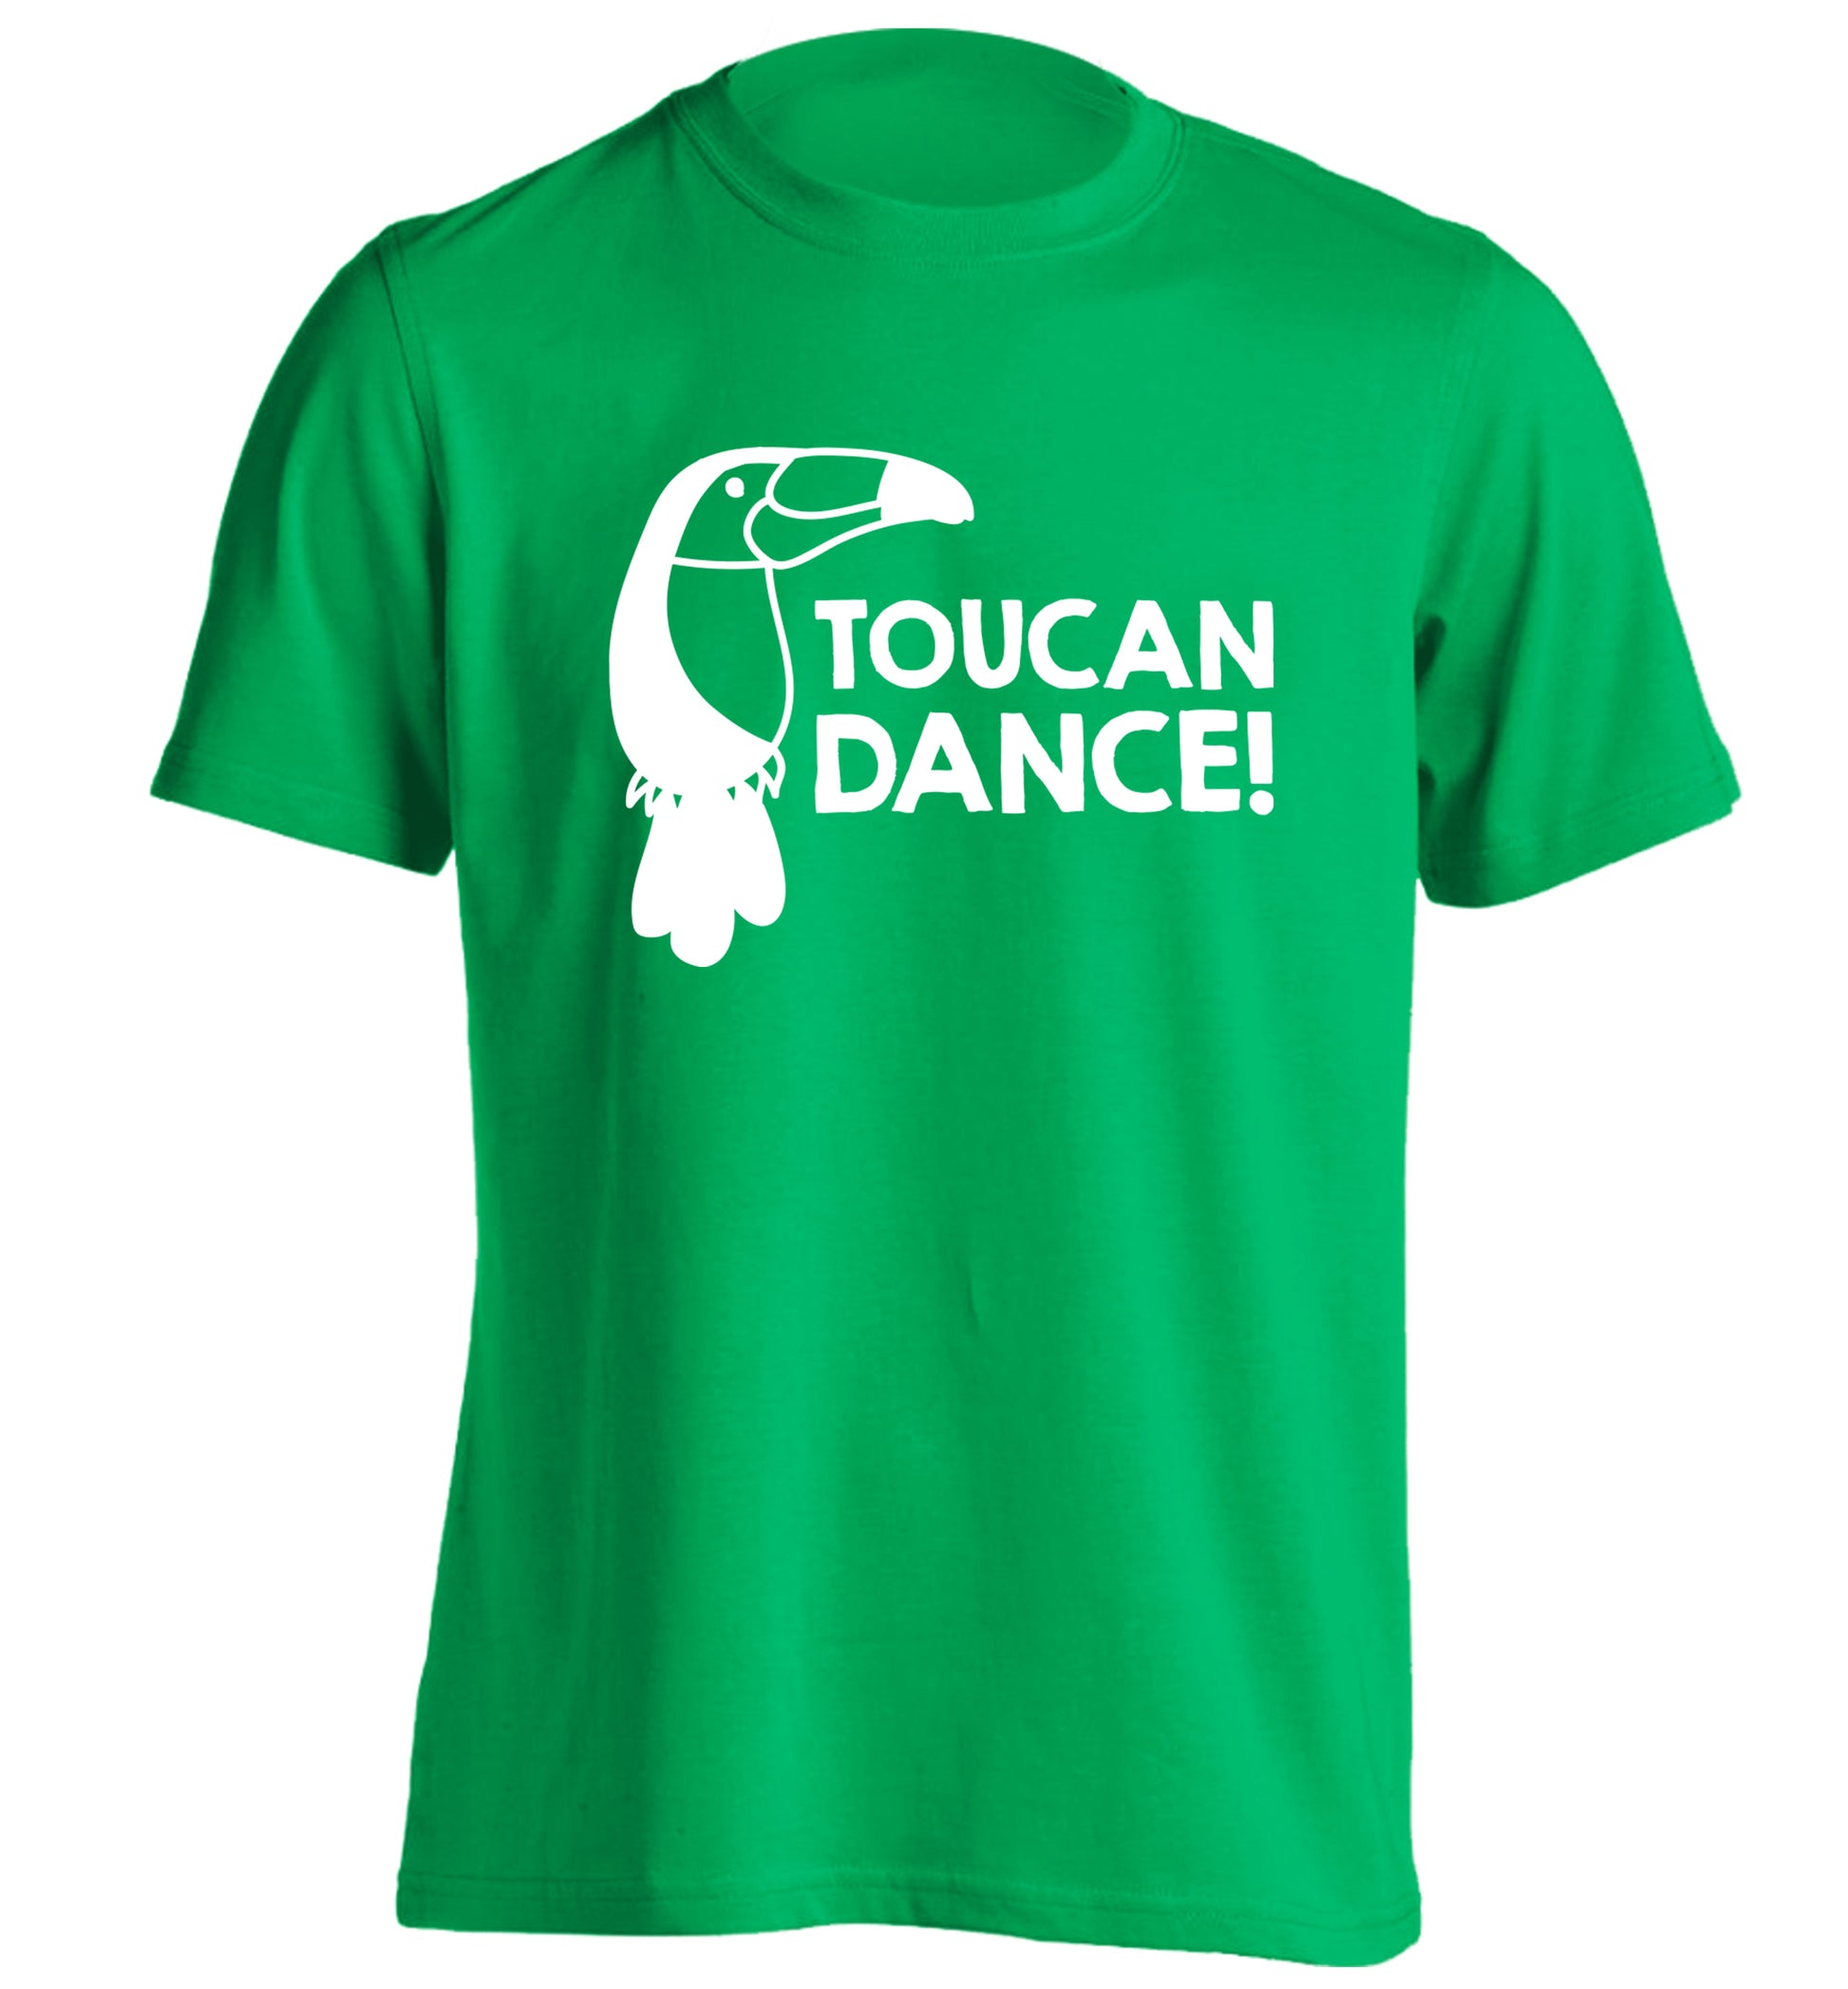 Toucan dance adults unisex green Tshirt 2XL